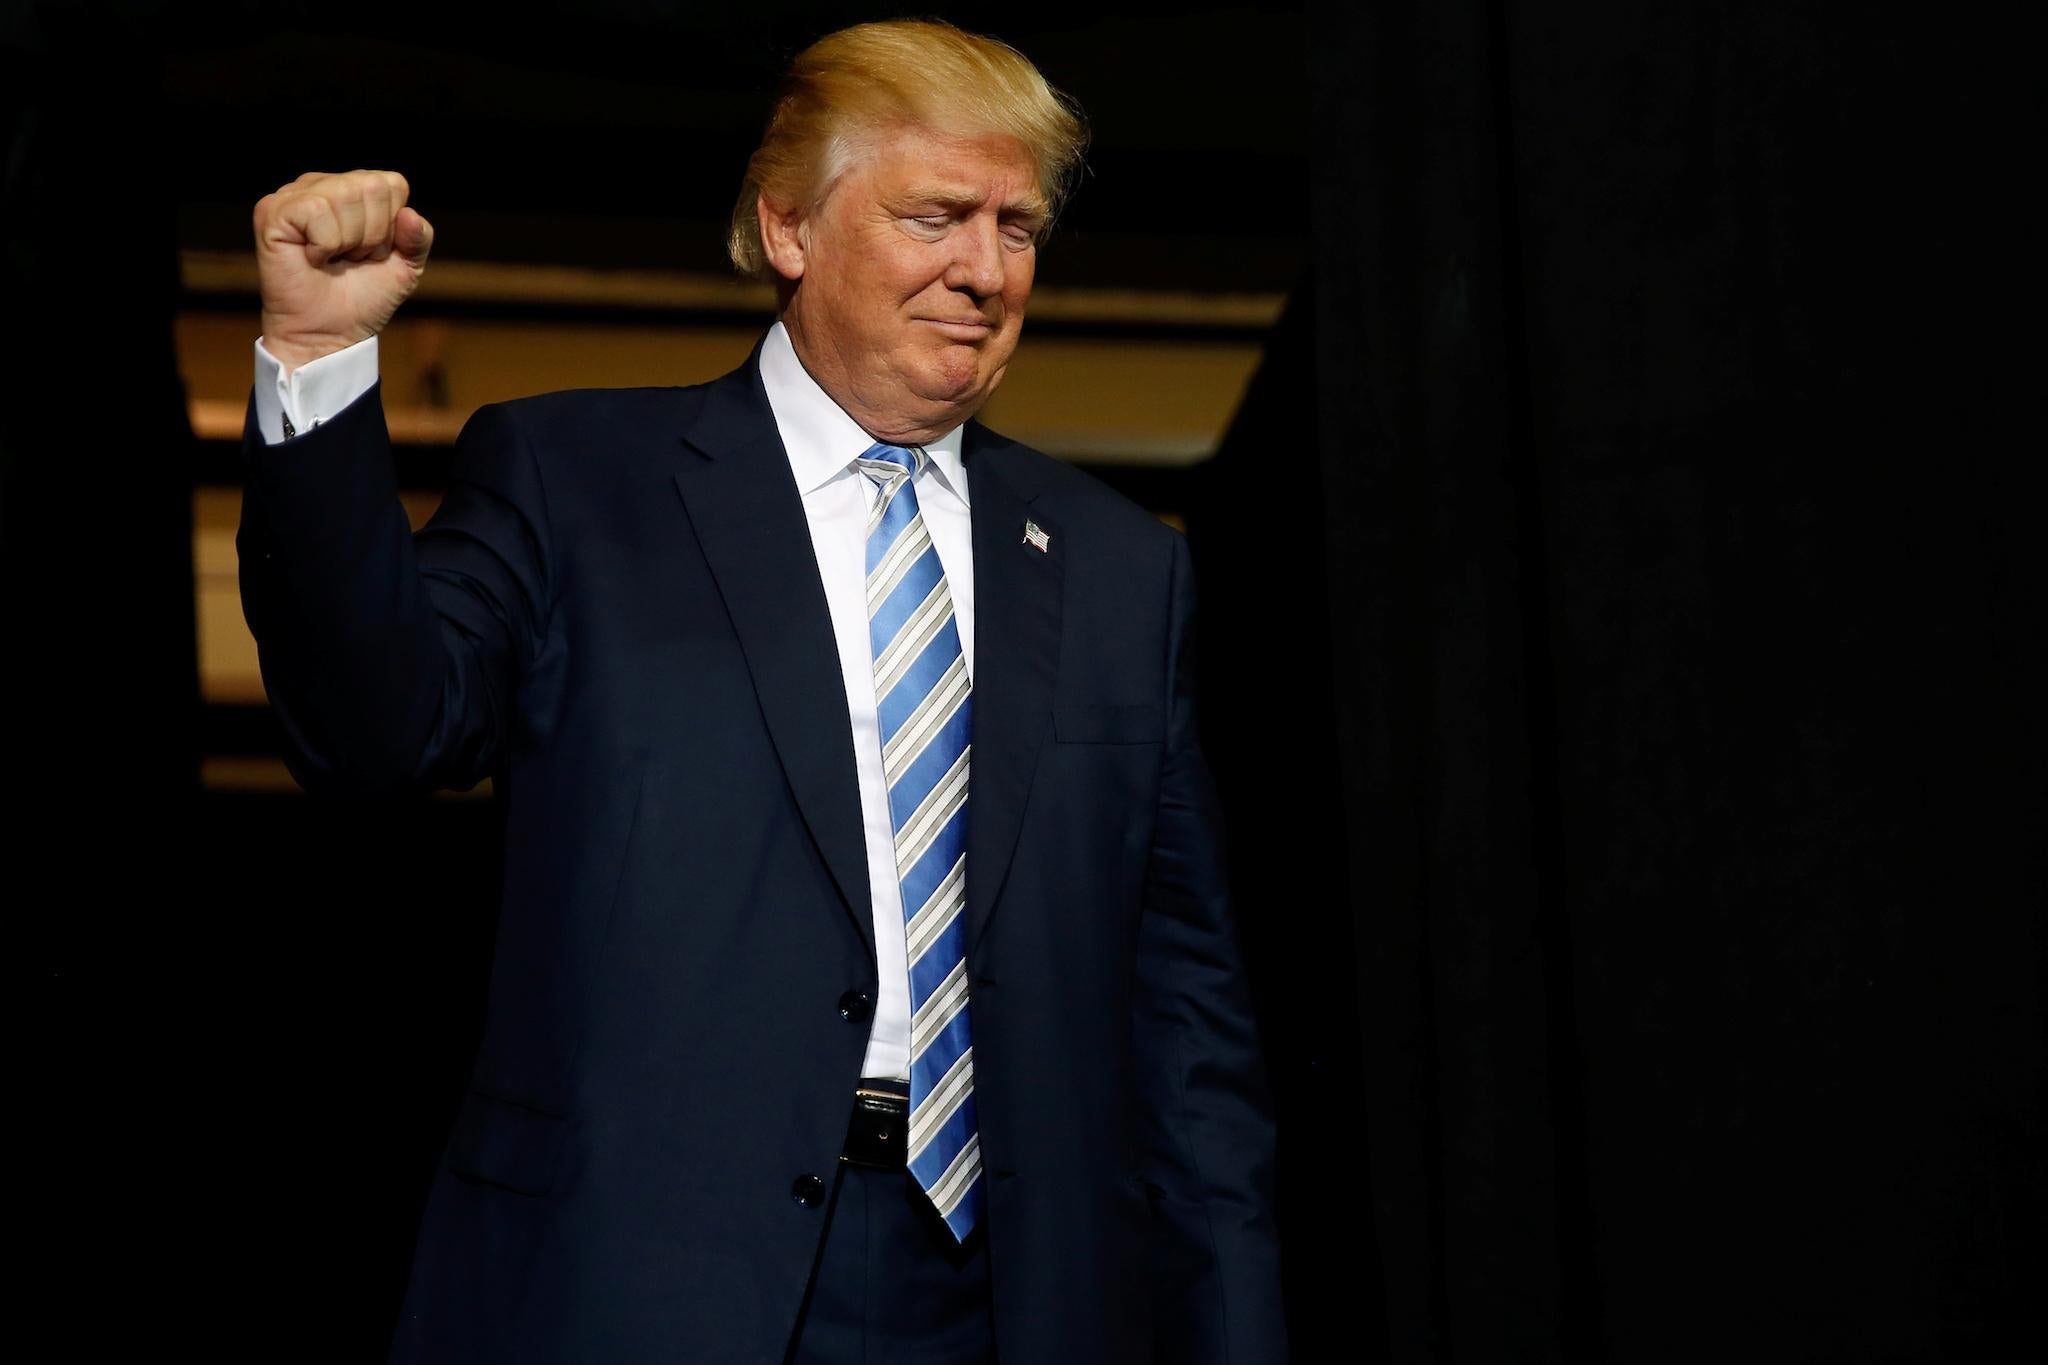 Republican presidential nominee Donald Trump attends a campaign rally in Sarasota, Florida, U.S. November 7, 2016